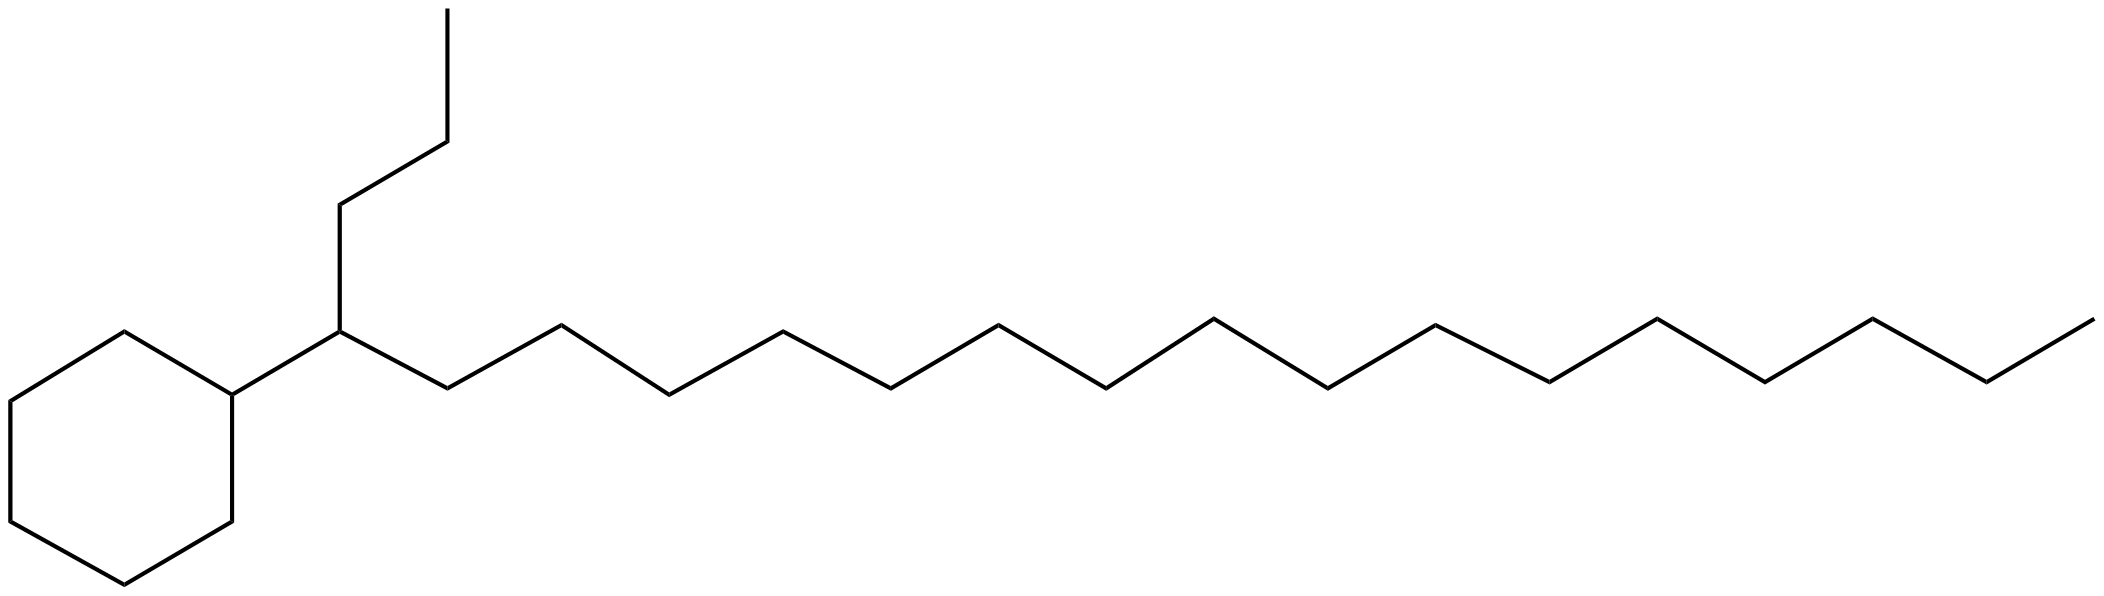 Image of 4-cyclohexyleicosane